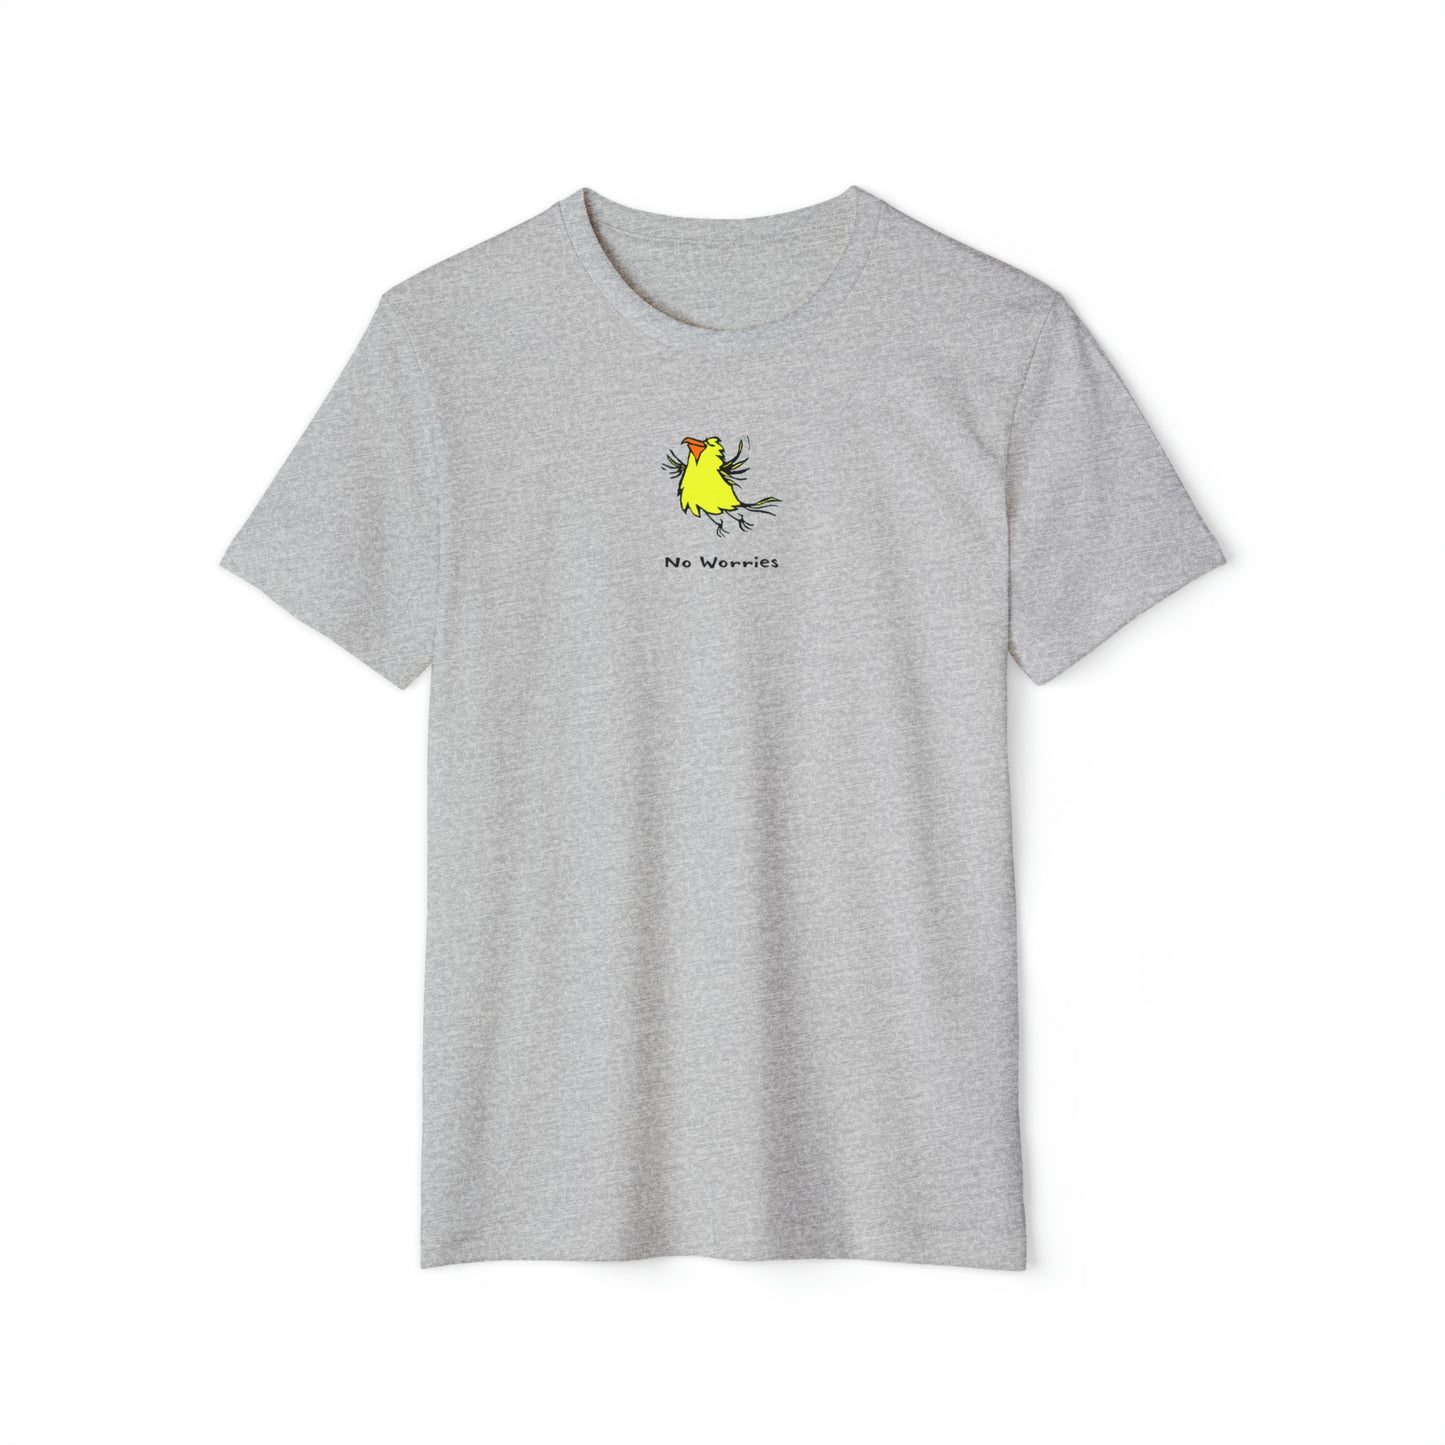 Yellow flying bird with orange beak on athletic heather grey color unisex men's t-shirt. Text under image says No Worries